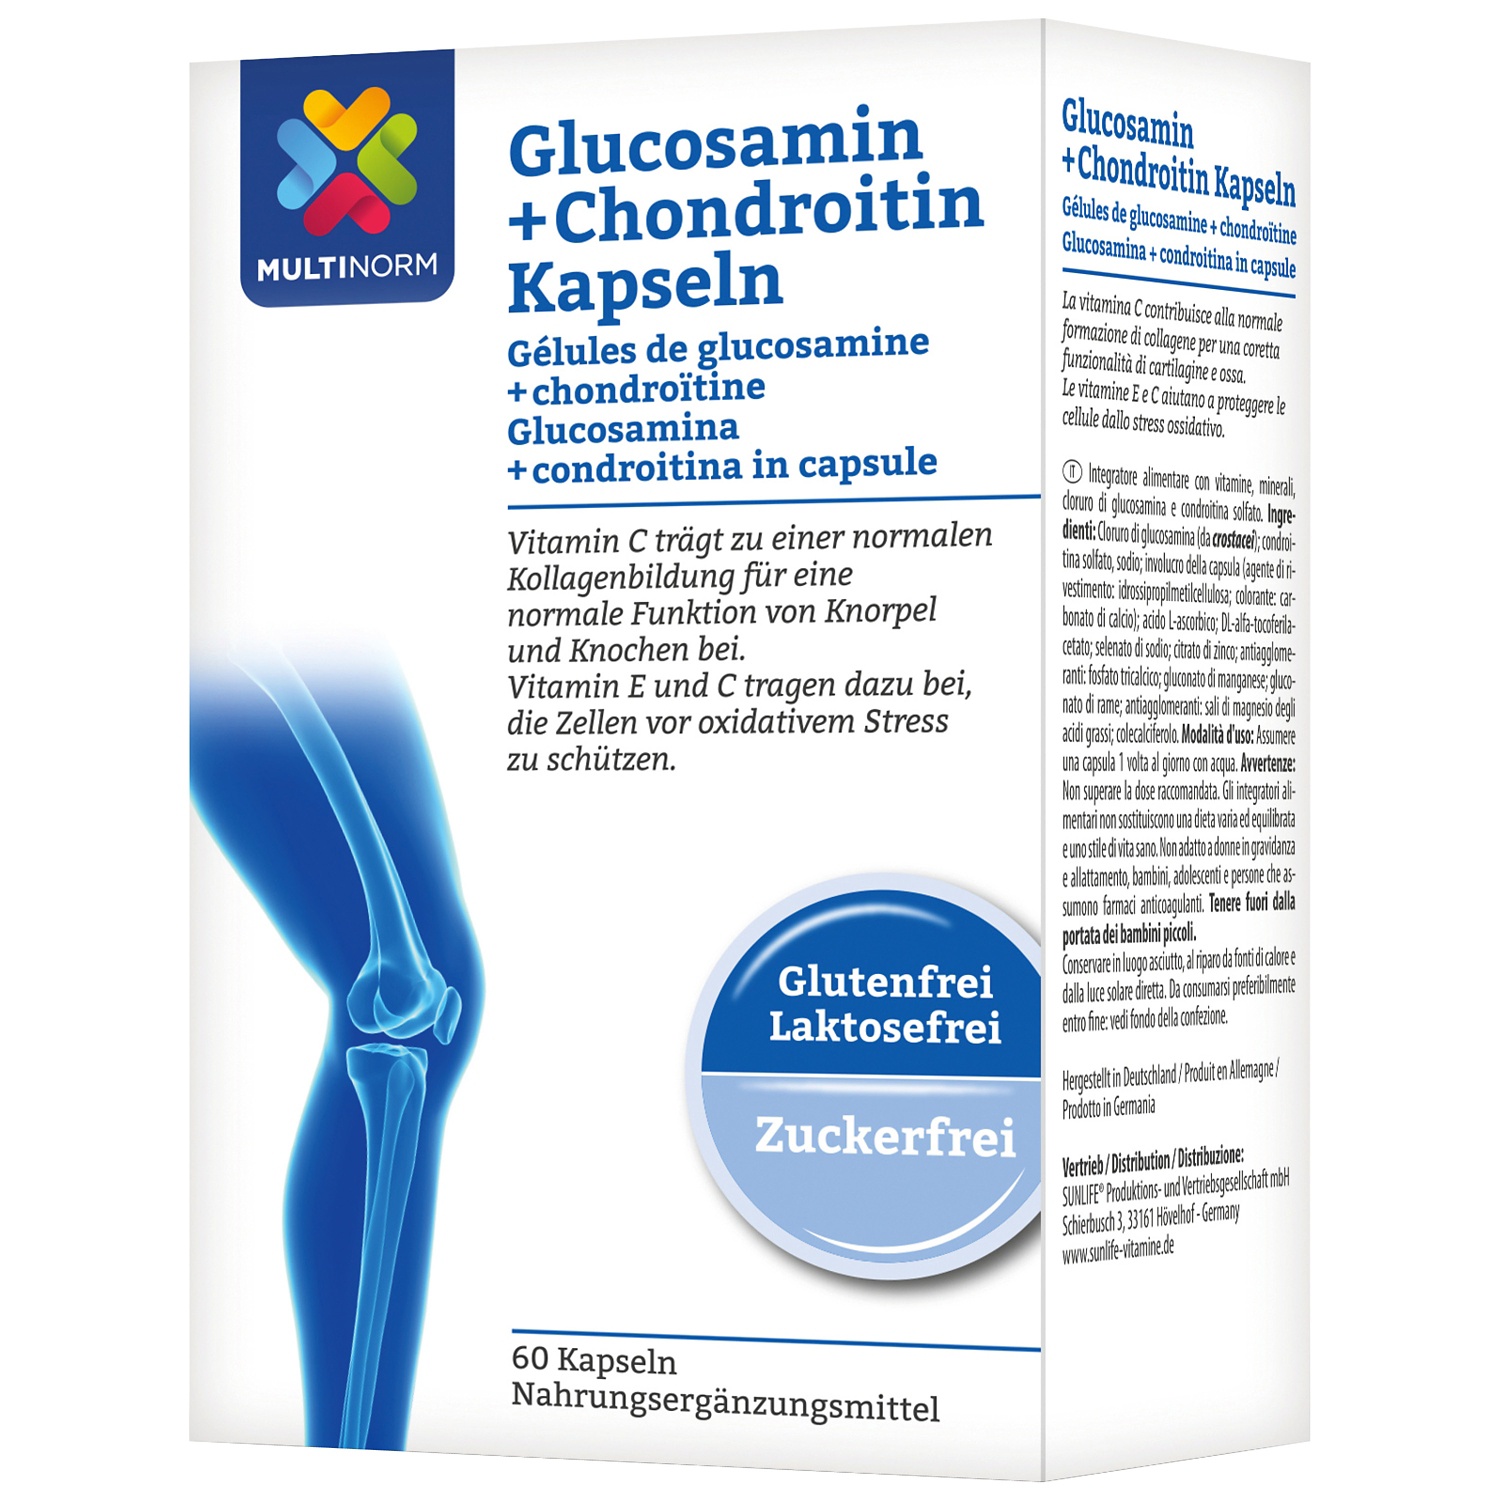 MULTINORM Glucosamin + Chondroitin Kapseln